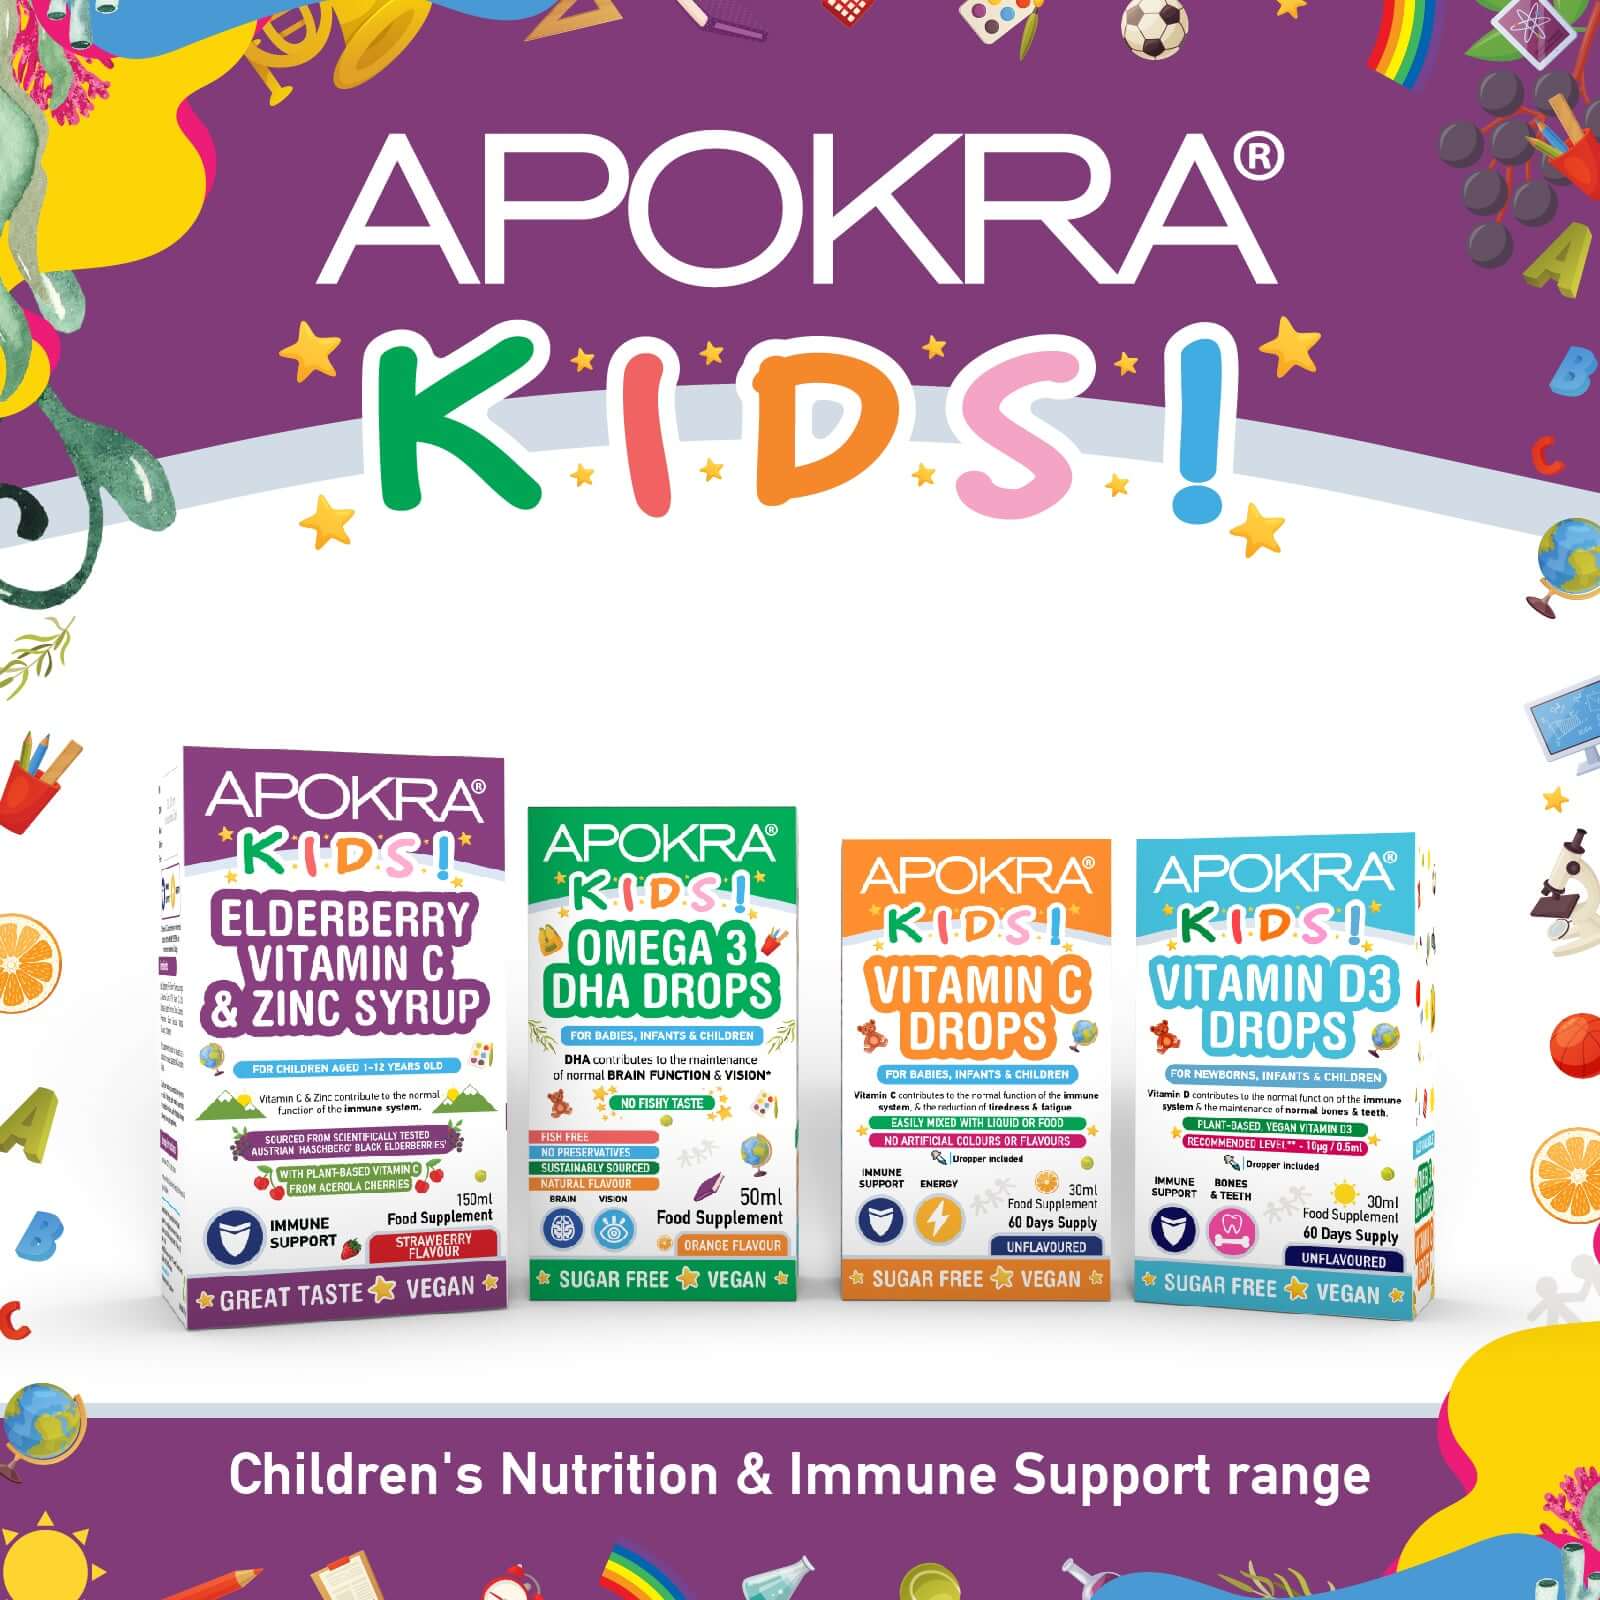 APOKRA Kids range with elderberry syrup, vitamin C, vitamin D3 & DHA Drops